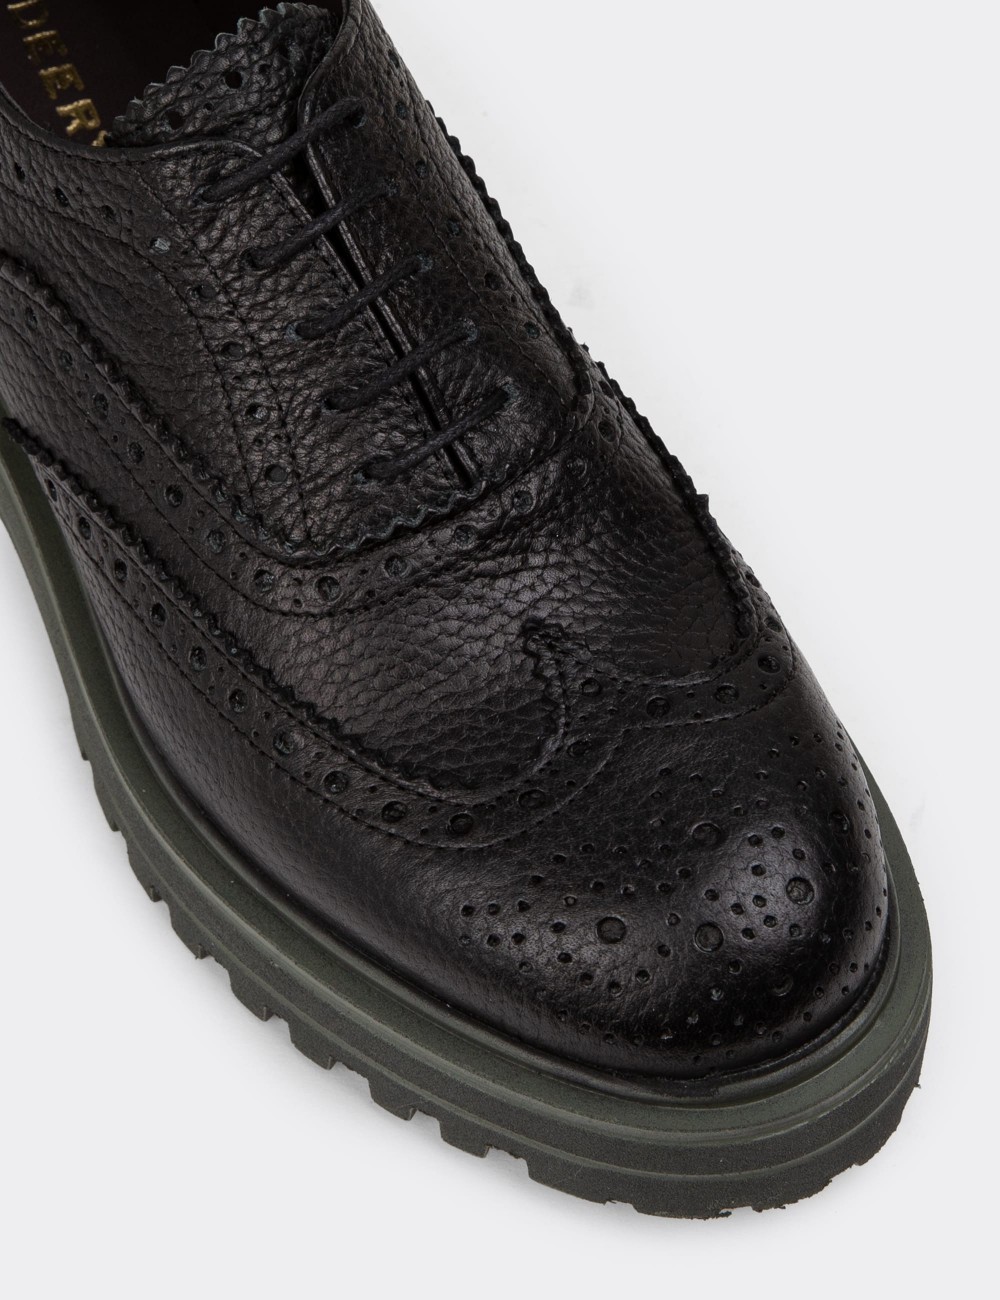 Black Leather Oxford Shoes - 01418ZSYHE09